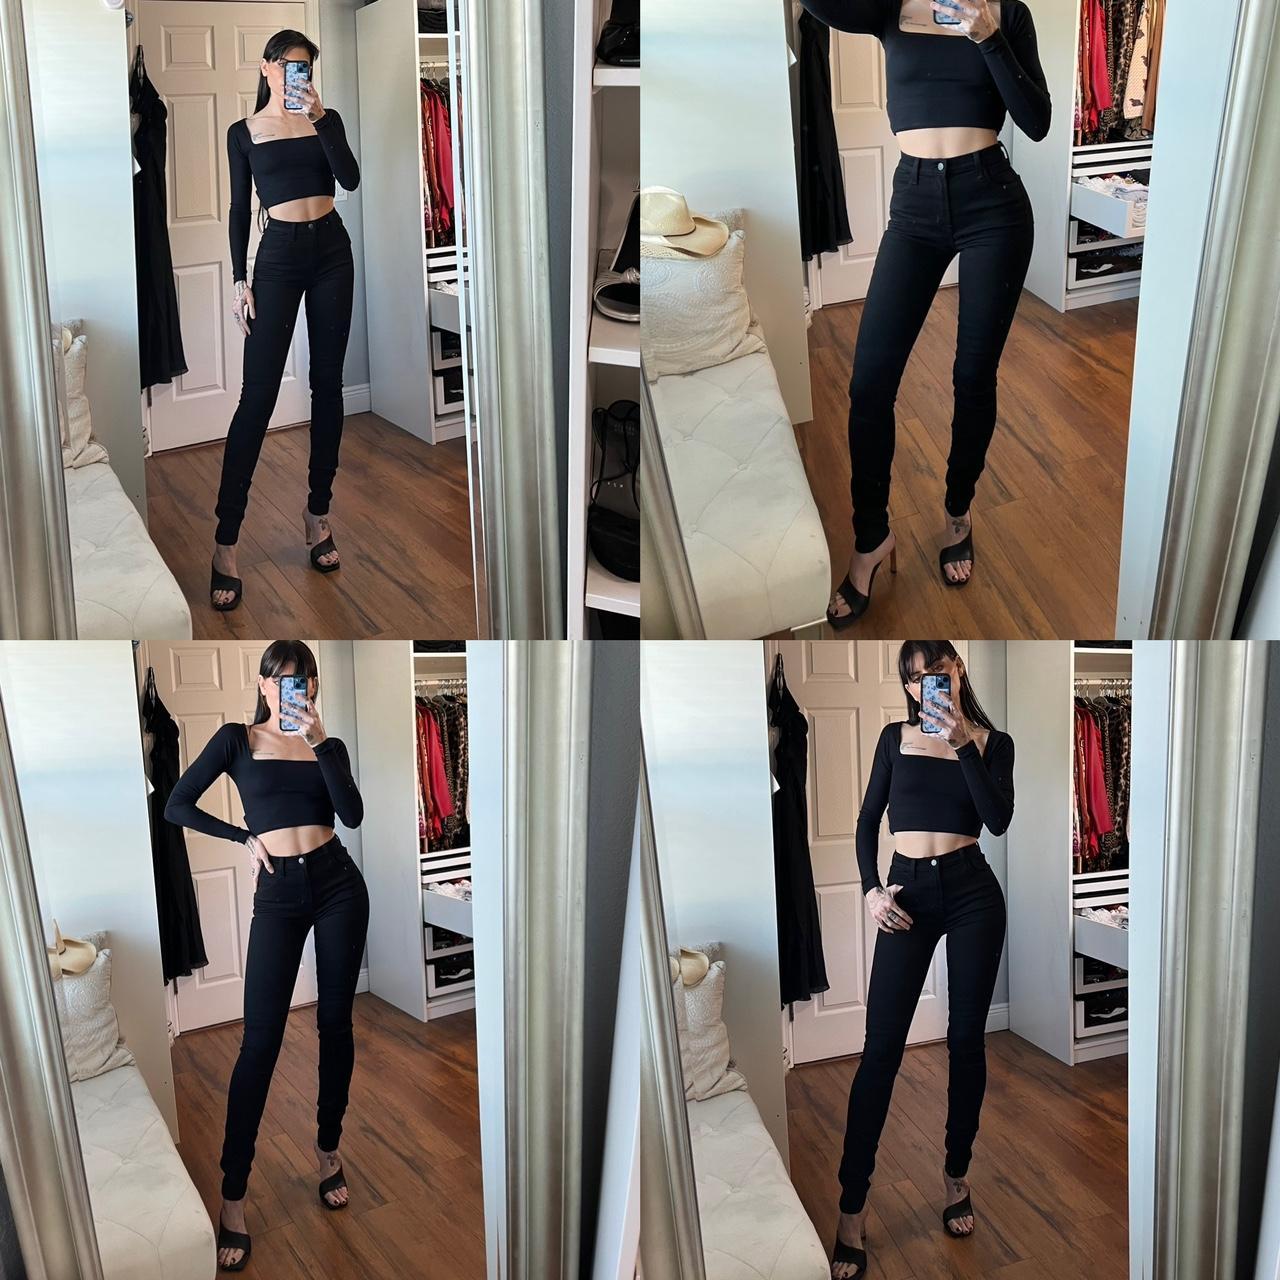 J Brand Carolina super high-rise skinny jeans in black size 26